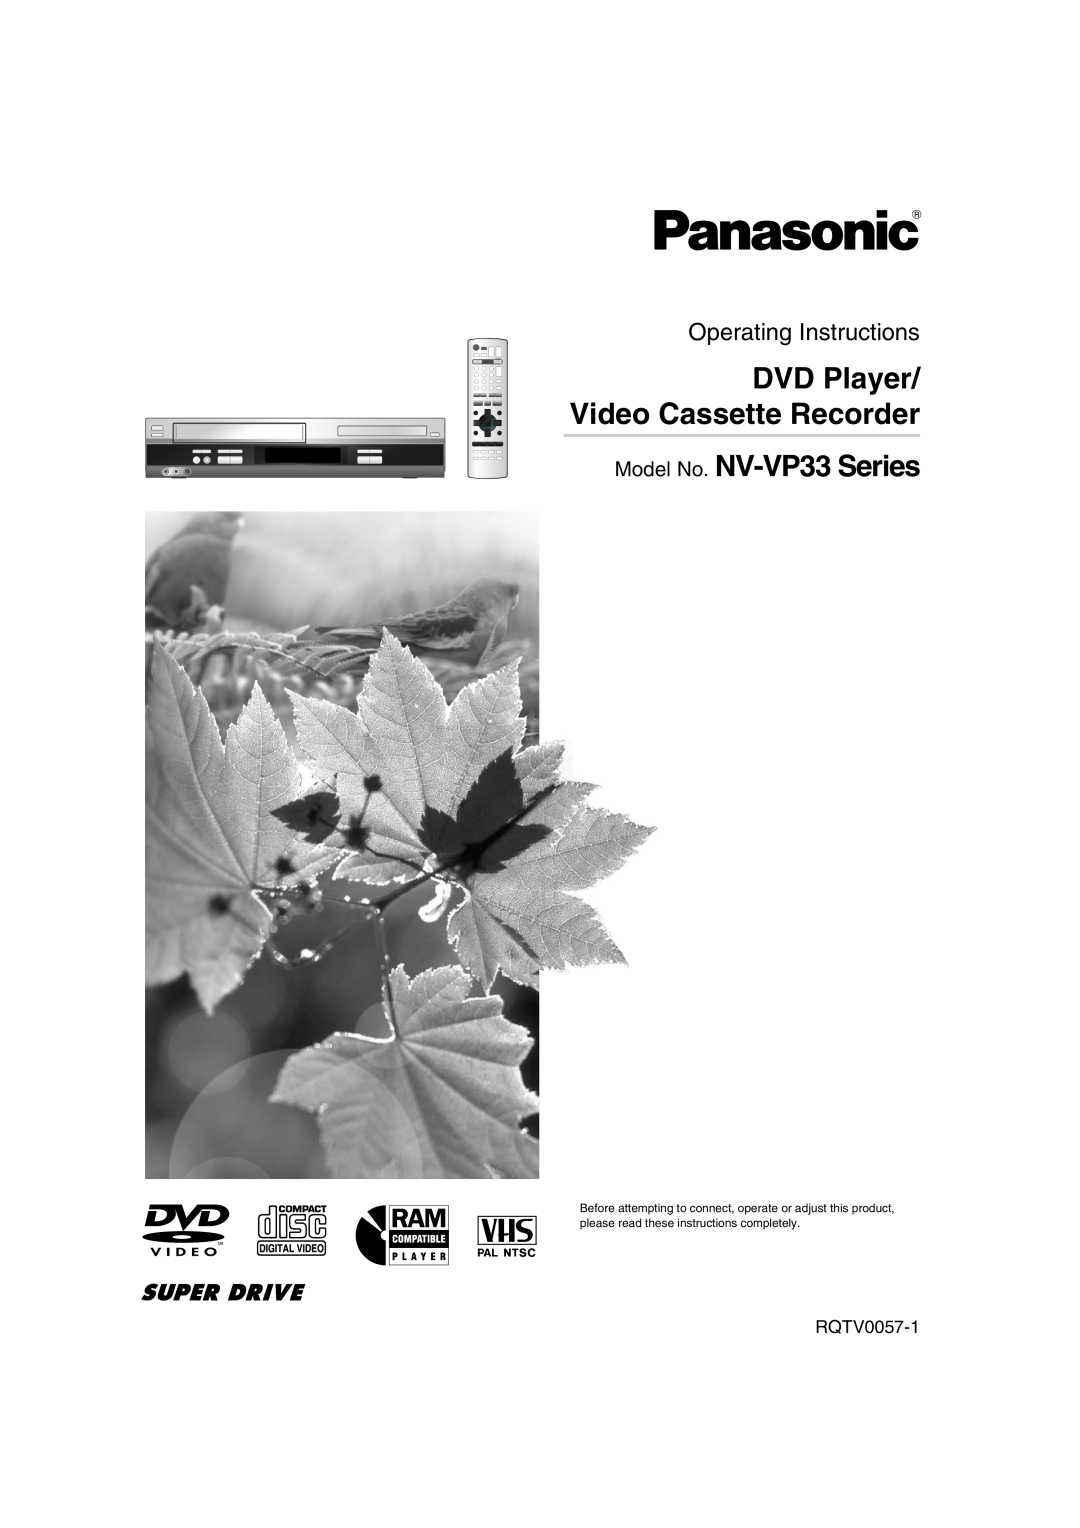 Panasonic operating instructions Model No. NV-VP33 Series, DVD Player/ Video Cassette Recorder, Operating Instructions 